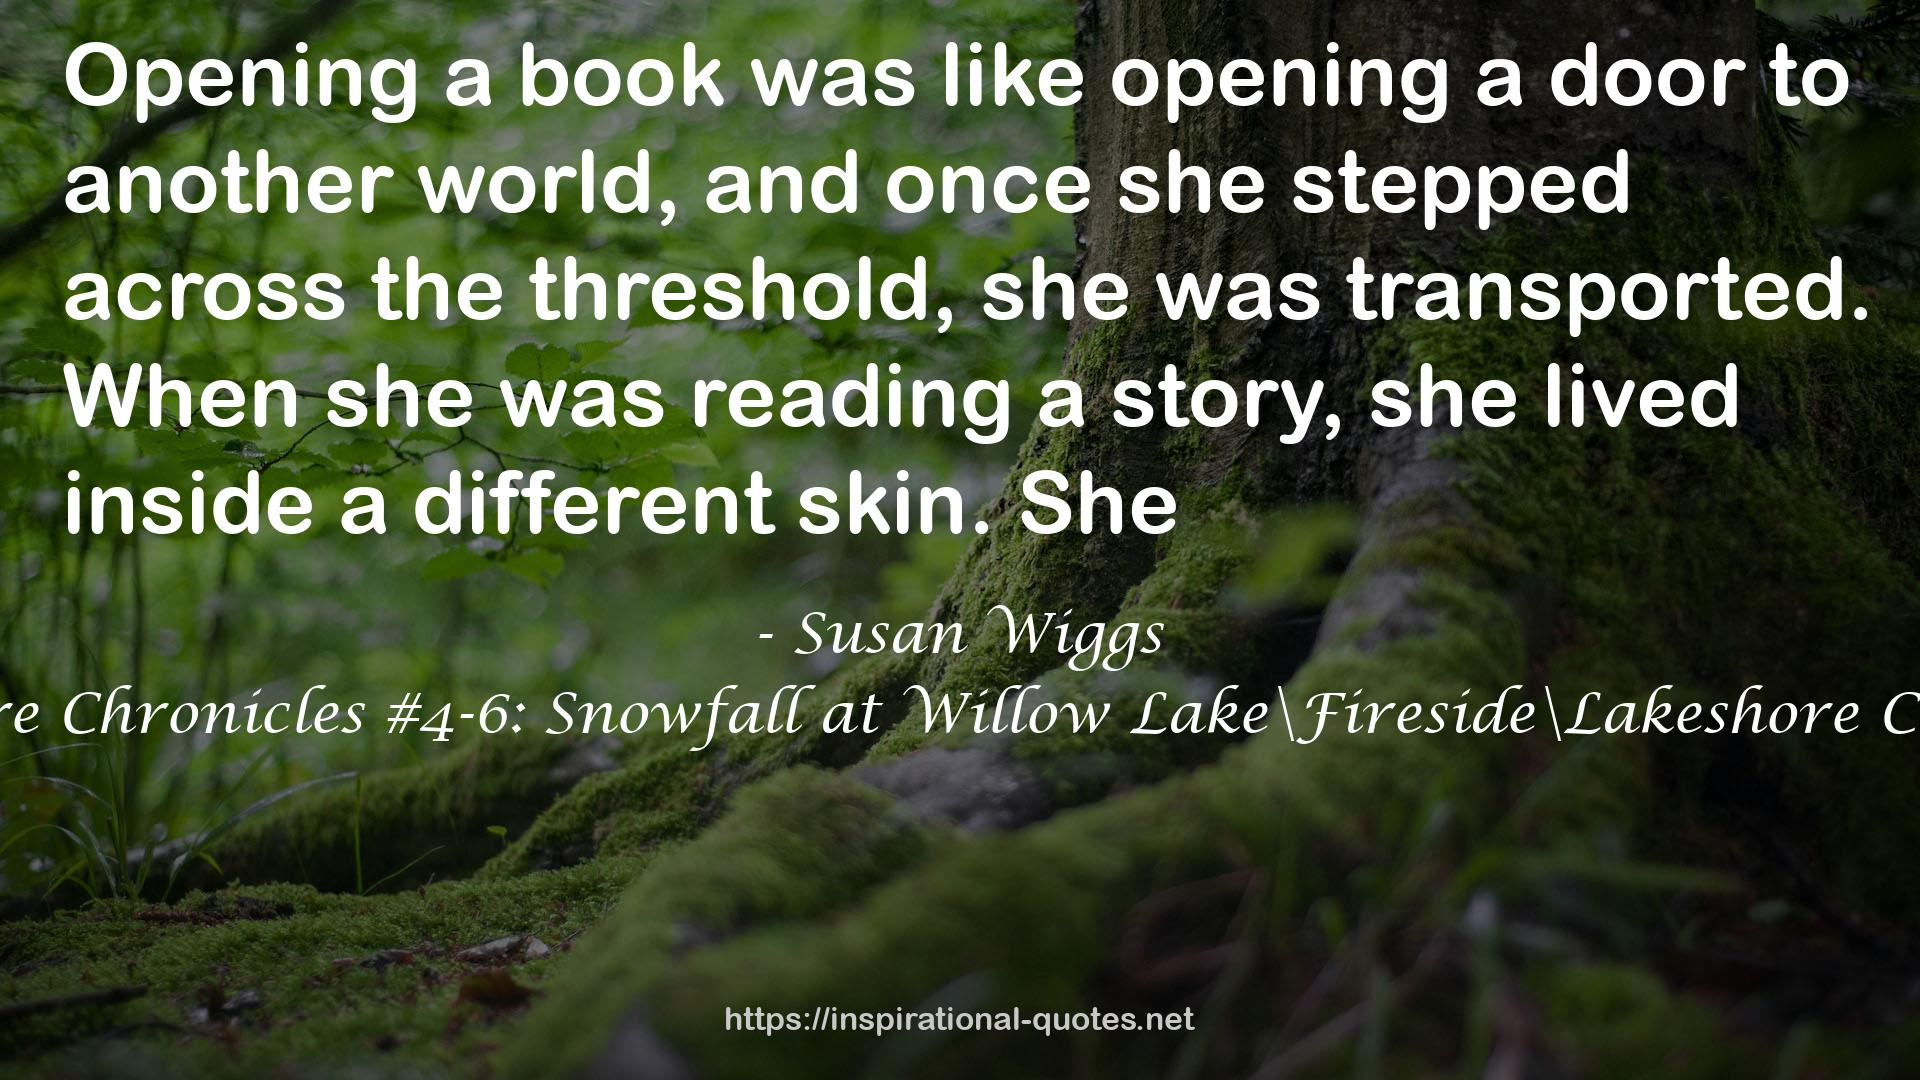 Lakeshore Chronicles #4-6: Snowfall at Willow Lake\Fireside\Lakeshore Christmas QUOTES